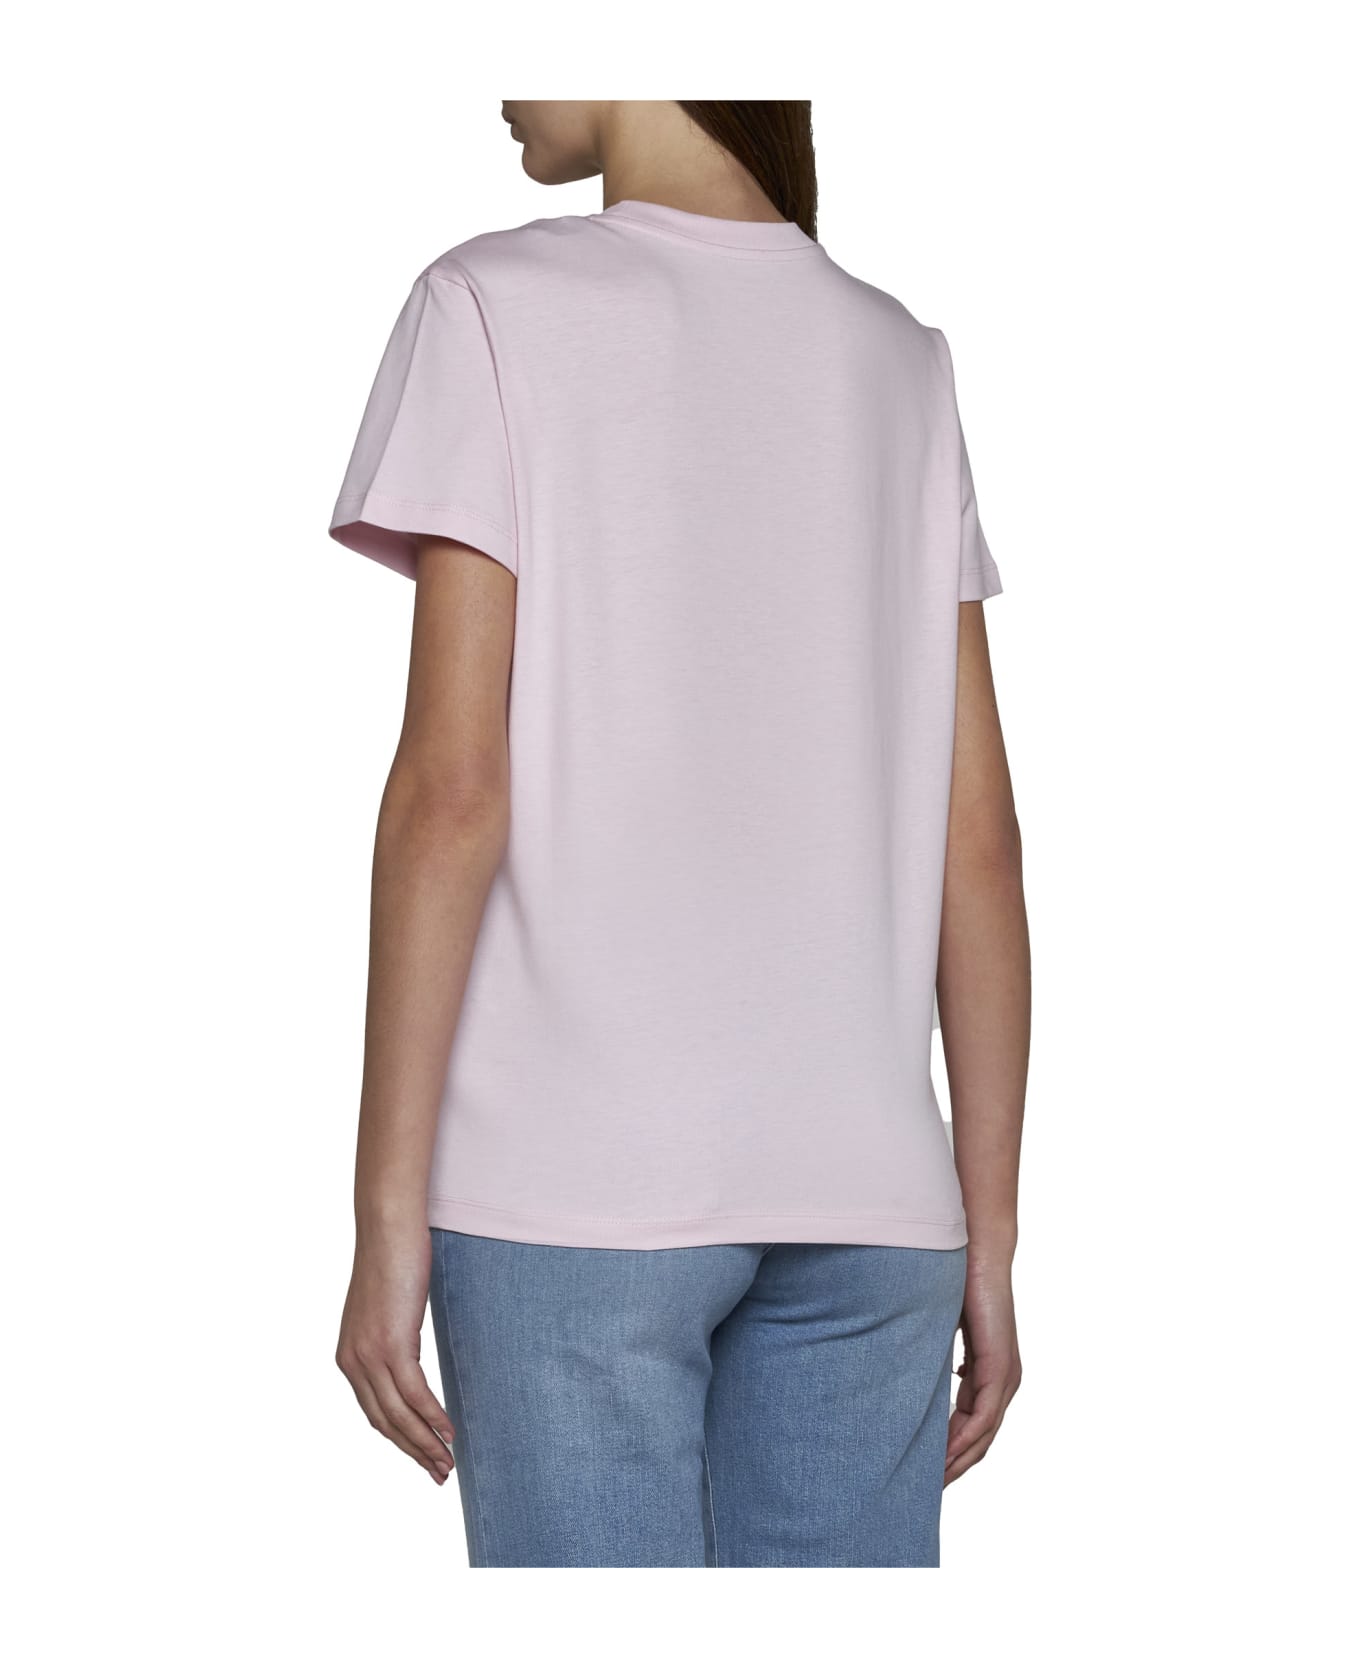 Moncler T-Shirt - Rosa